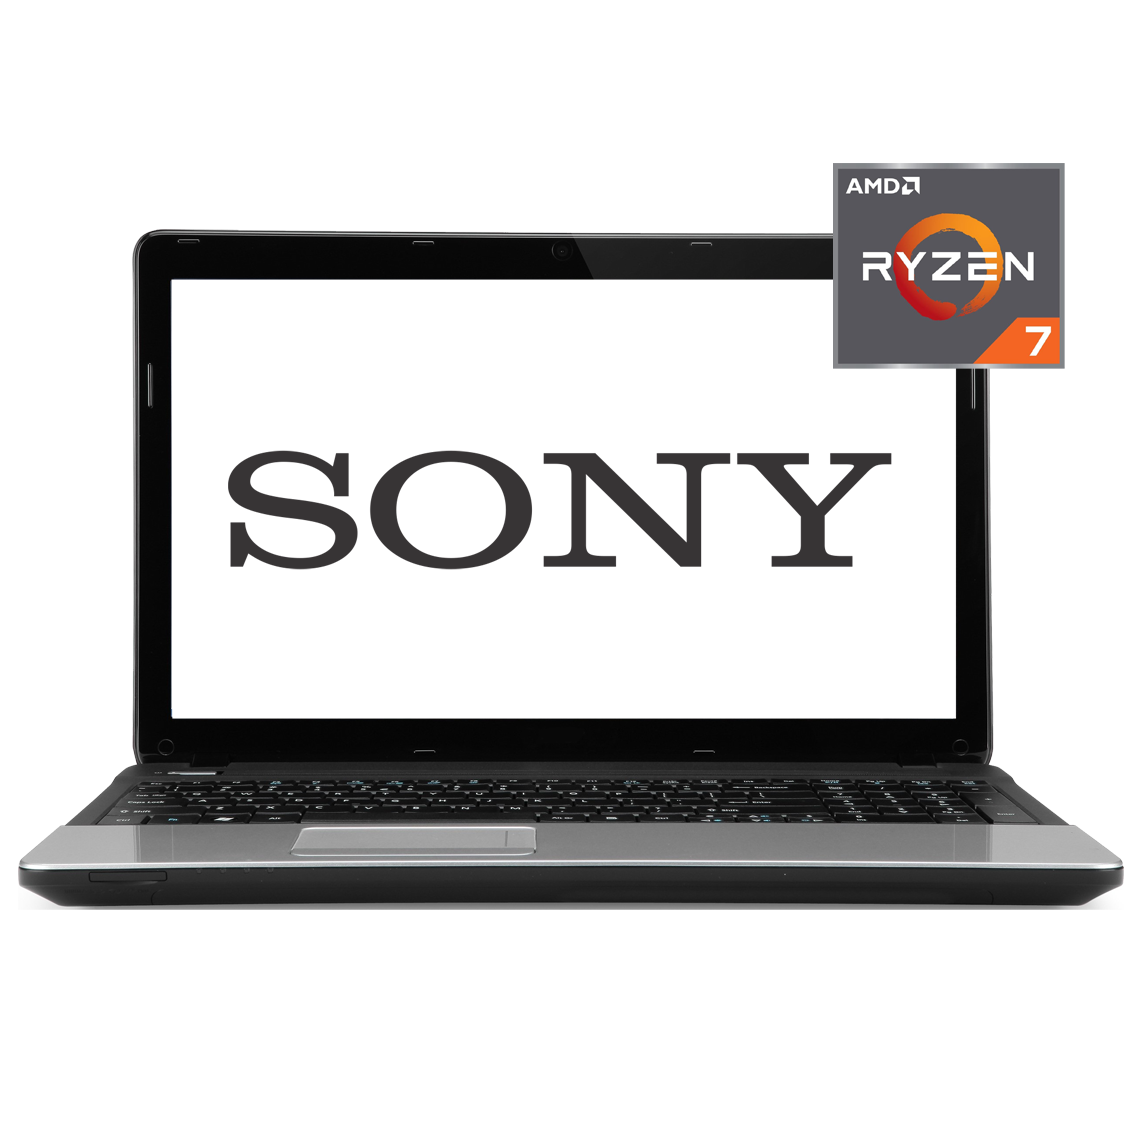 Sony - 14 inch AMD Ryzen 7